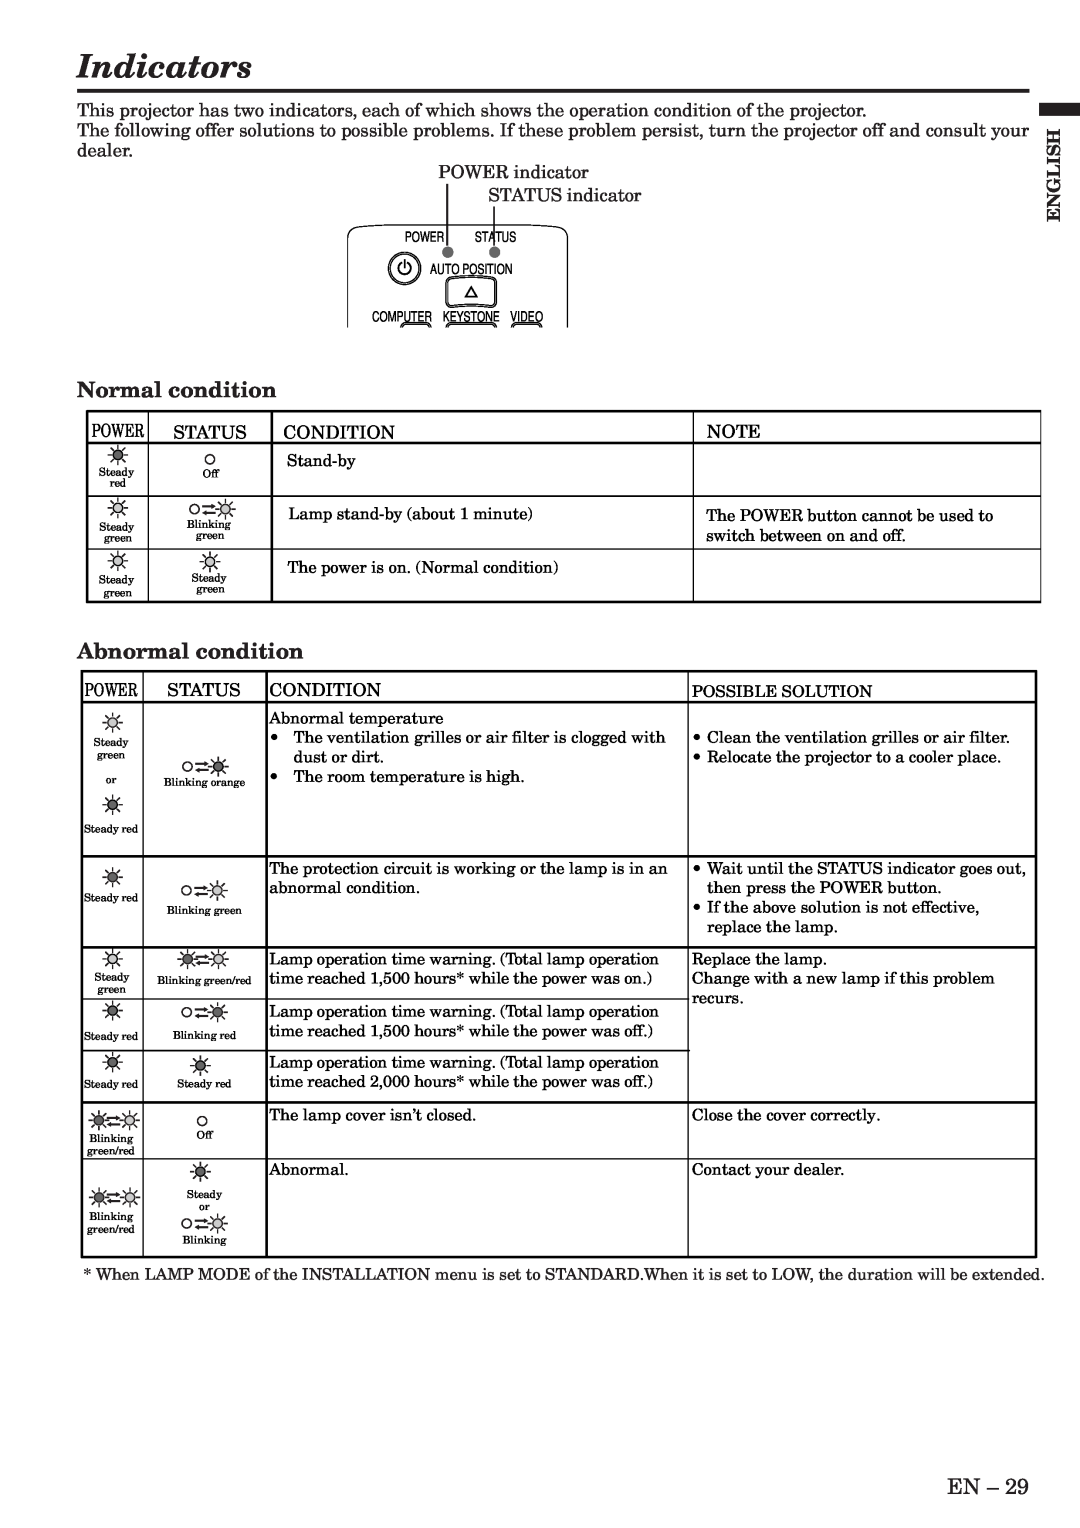 Mitsubishi Electronics XL5U user manual Indicators, Normal condition, Abnormal condition, English 